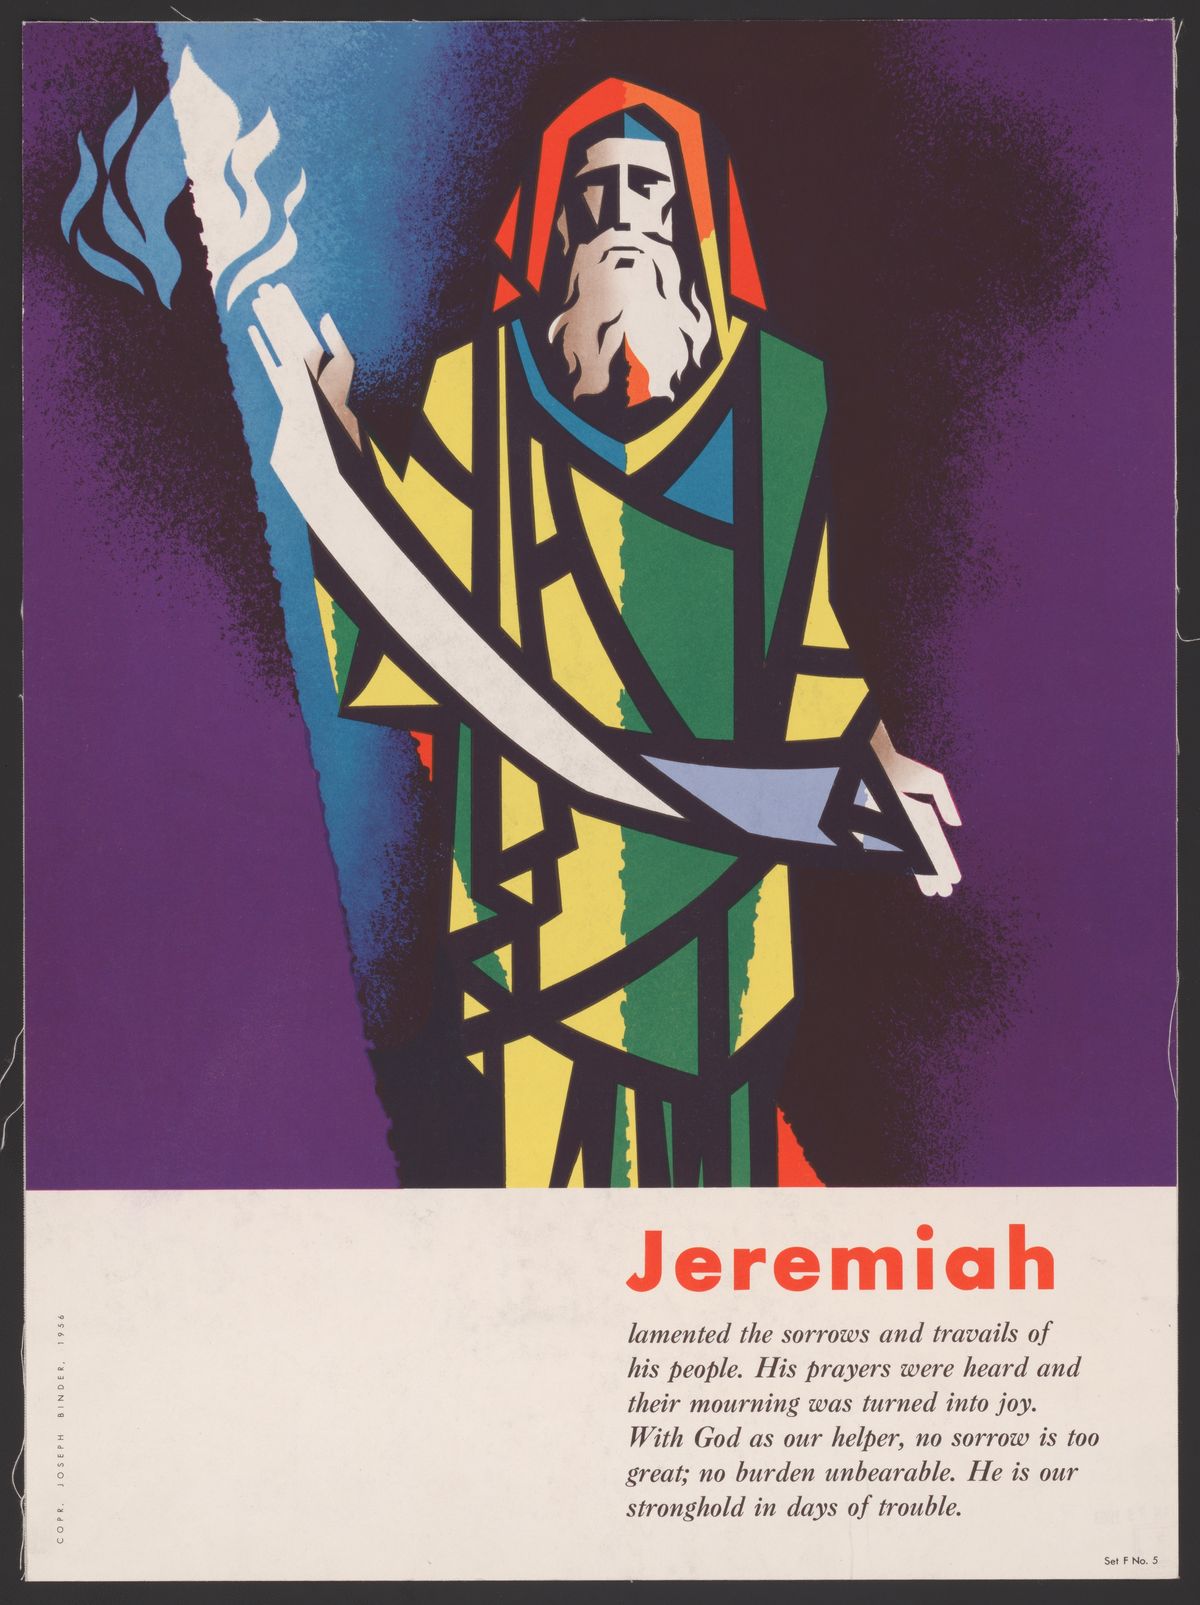 Jeremiah (1956) by Joseph Binder - Public Domain Bible Painting